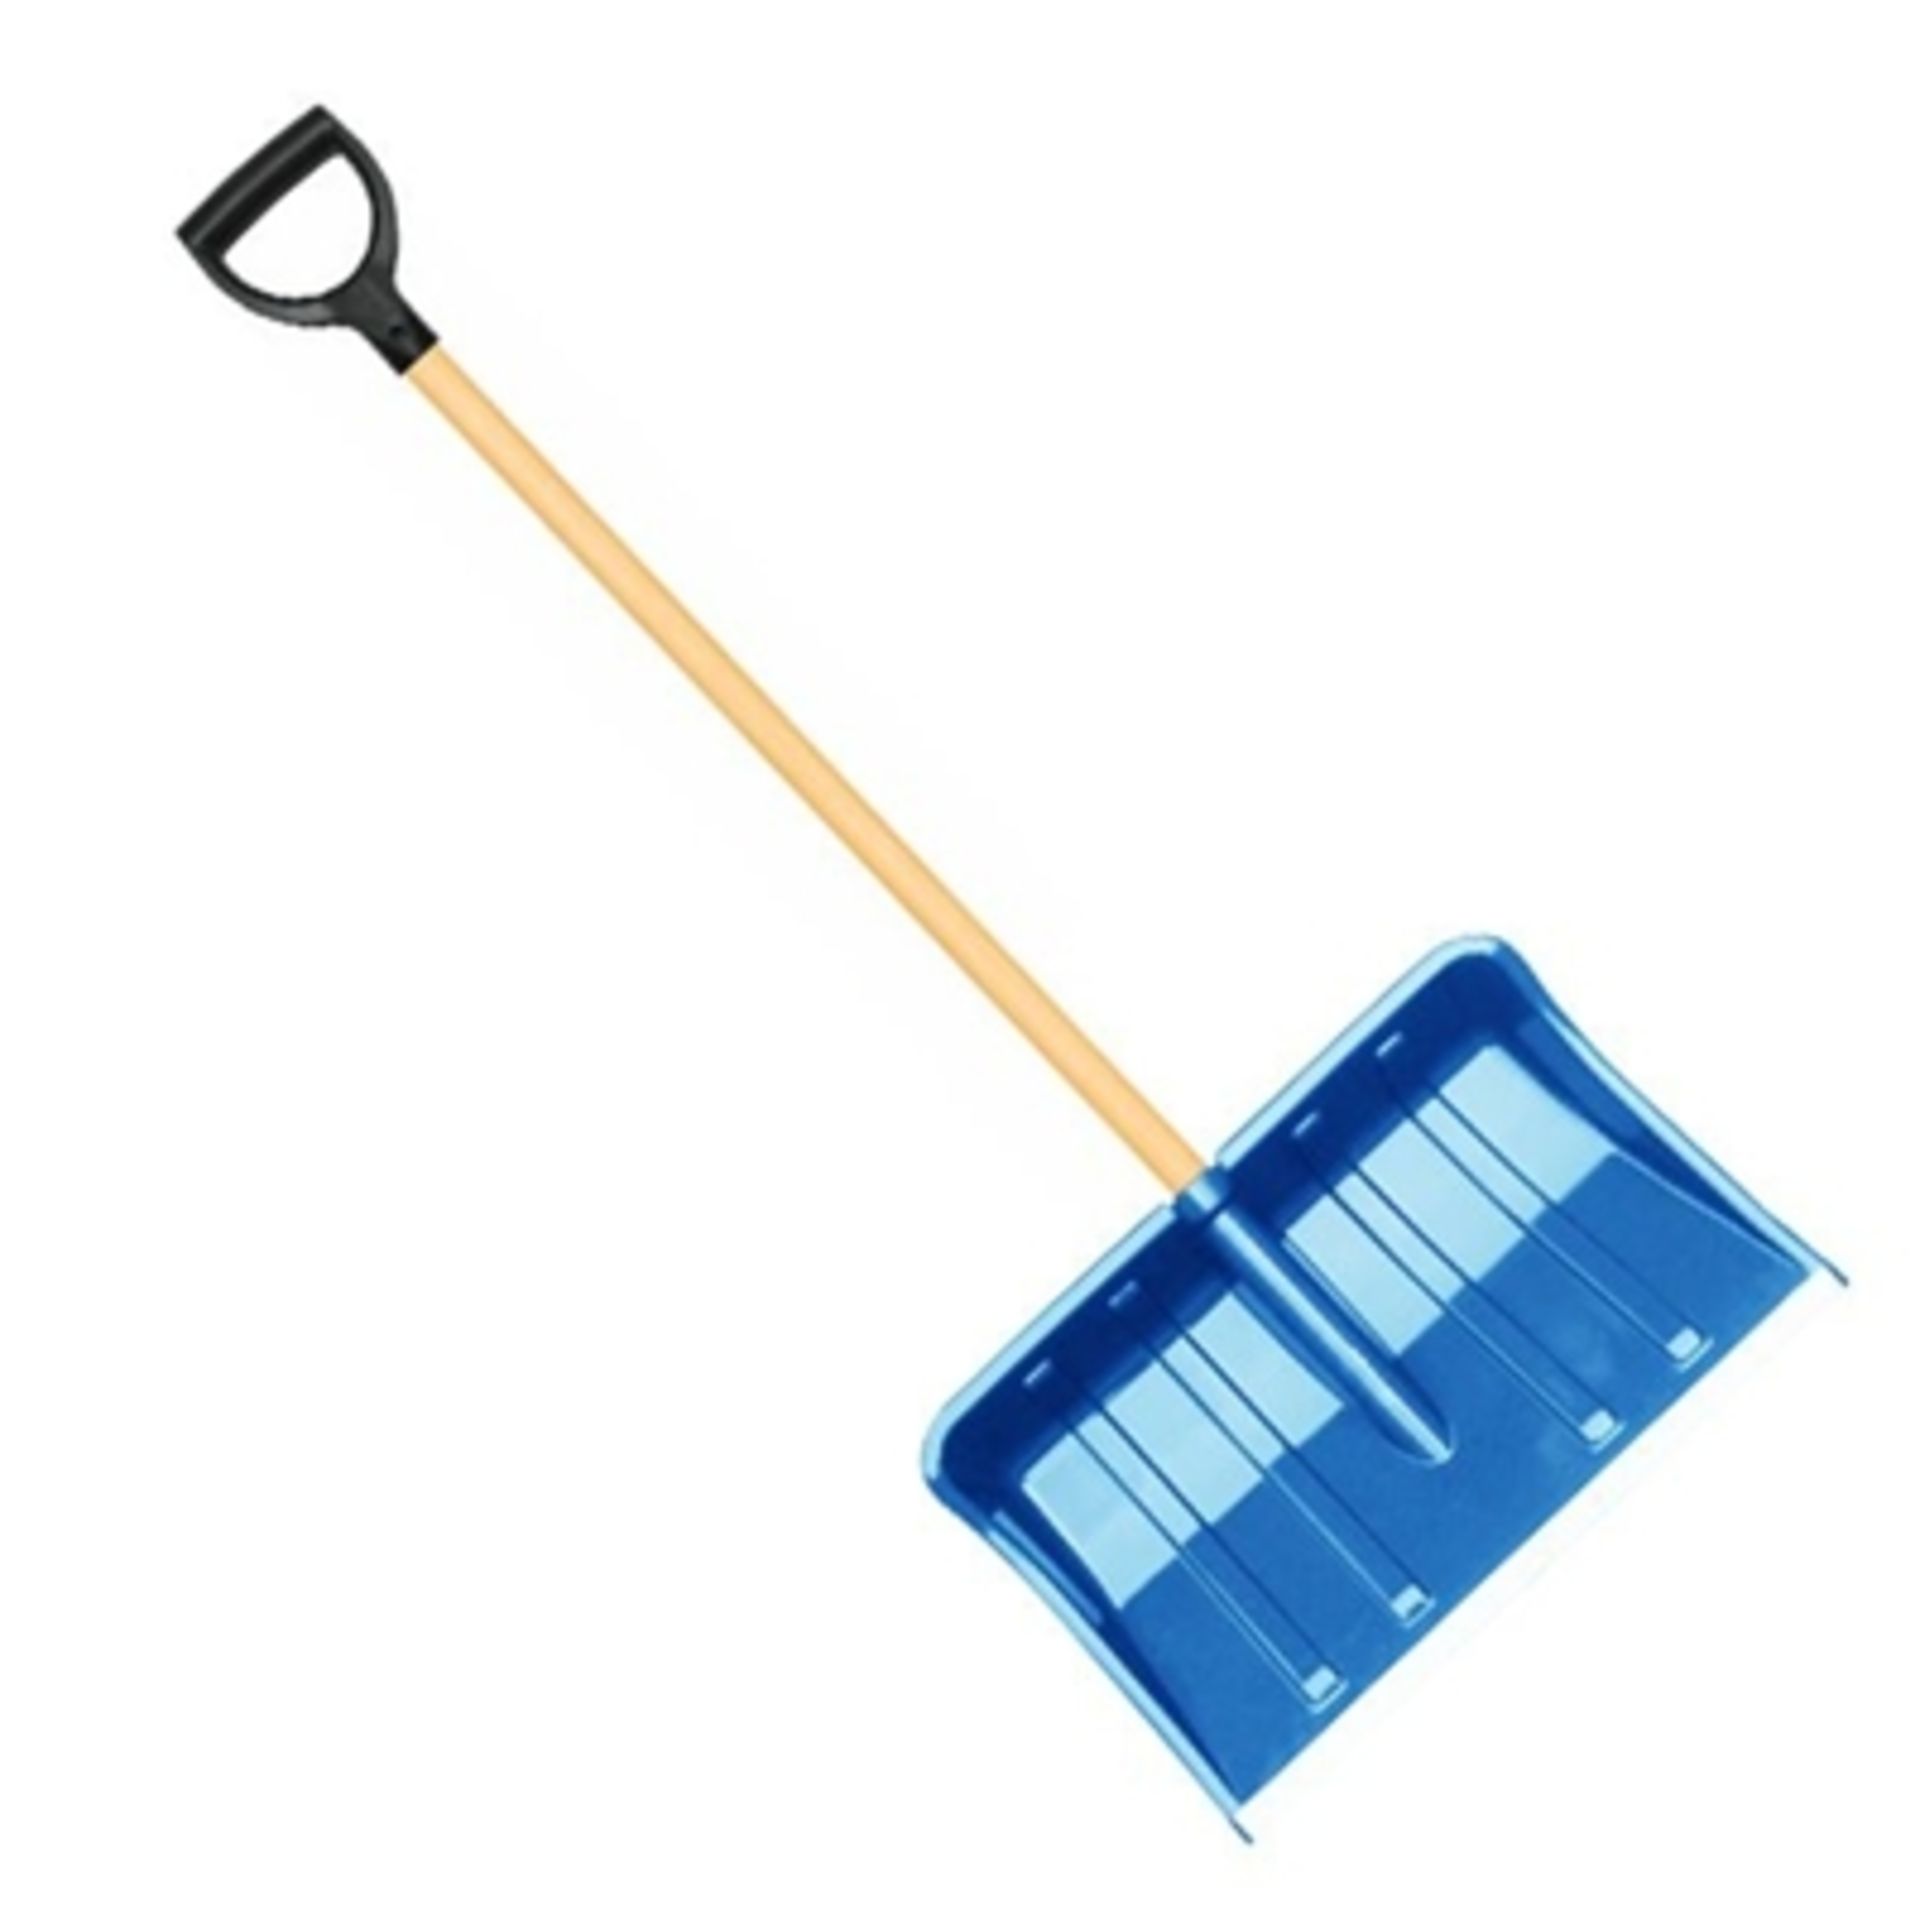 100 x Alpin 2 Wooden Shaft Blue Shovel with Metal Blade